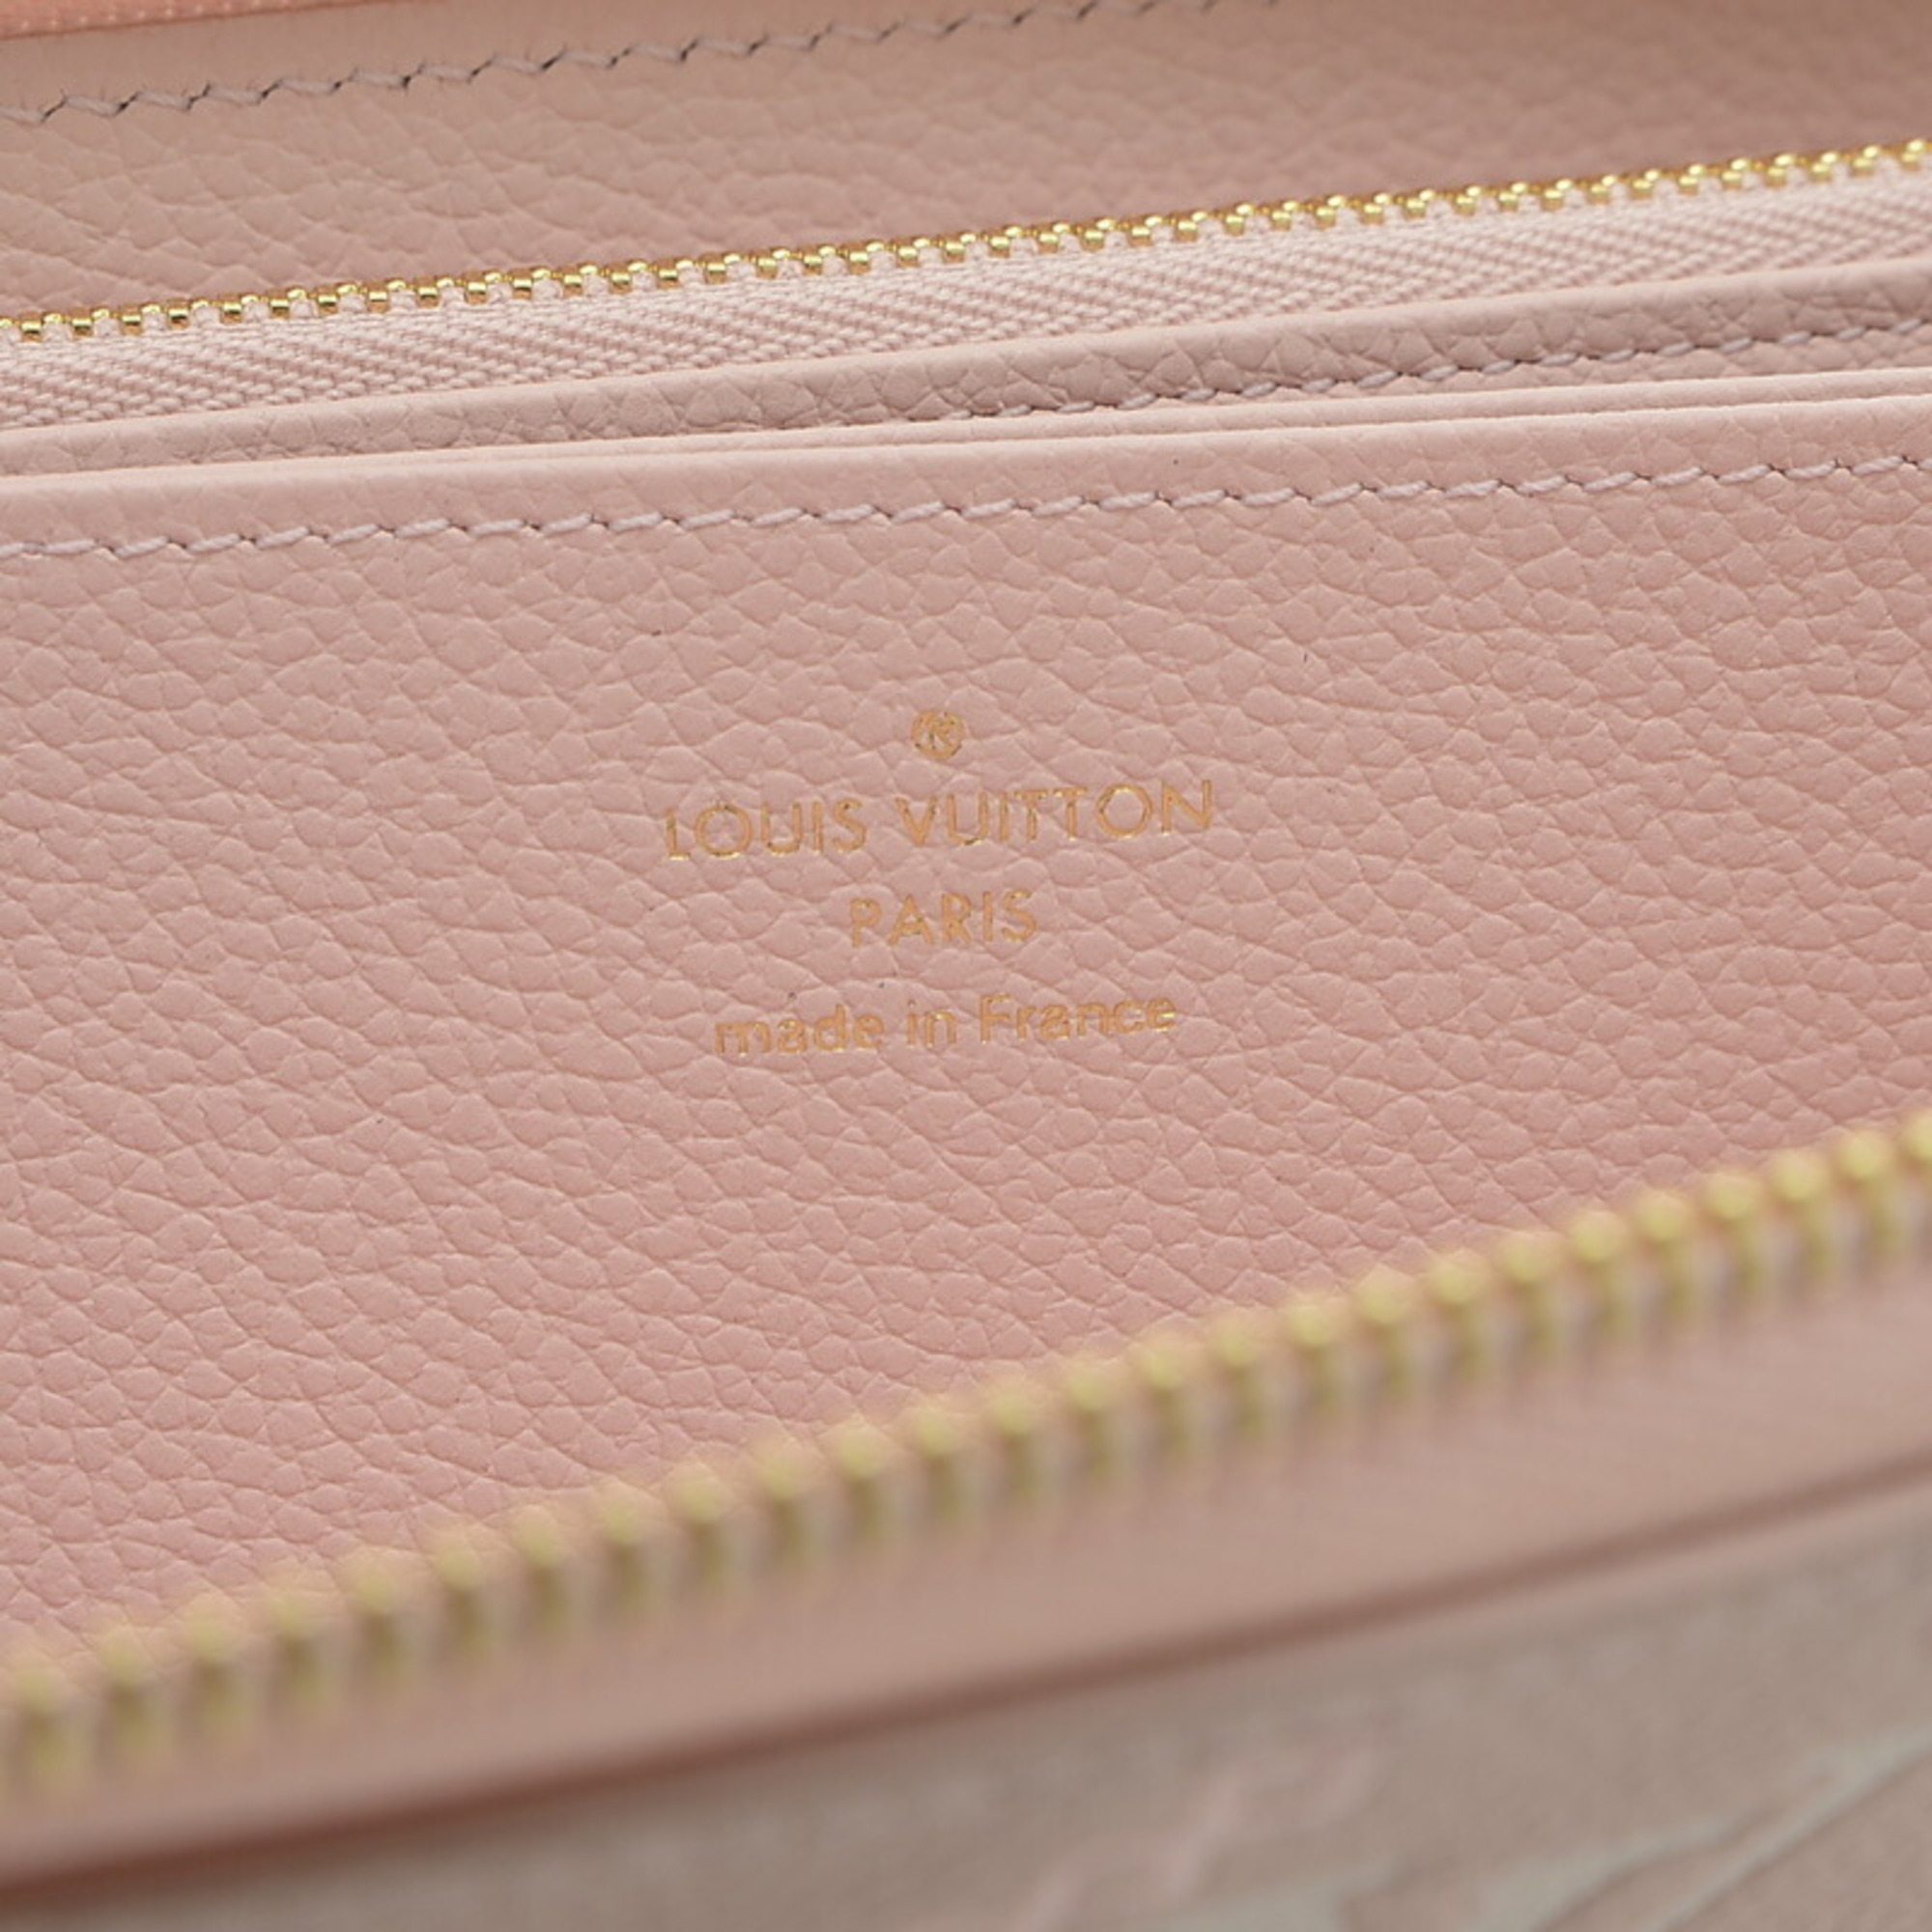 Louis Vuitton Monogram Empreinte Broderie Zippy Wallet Long Pink M81138